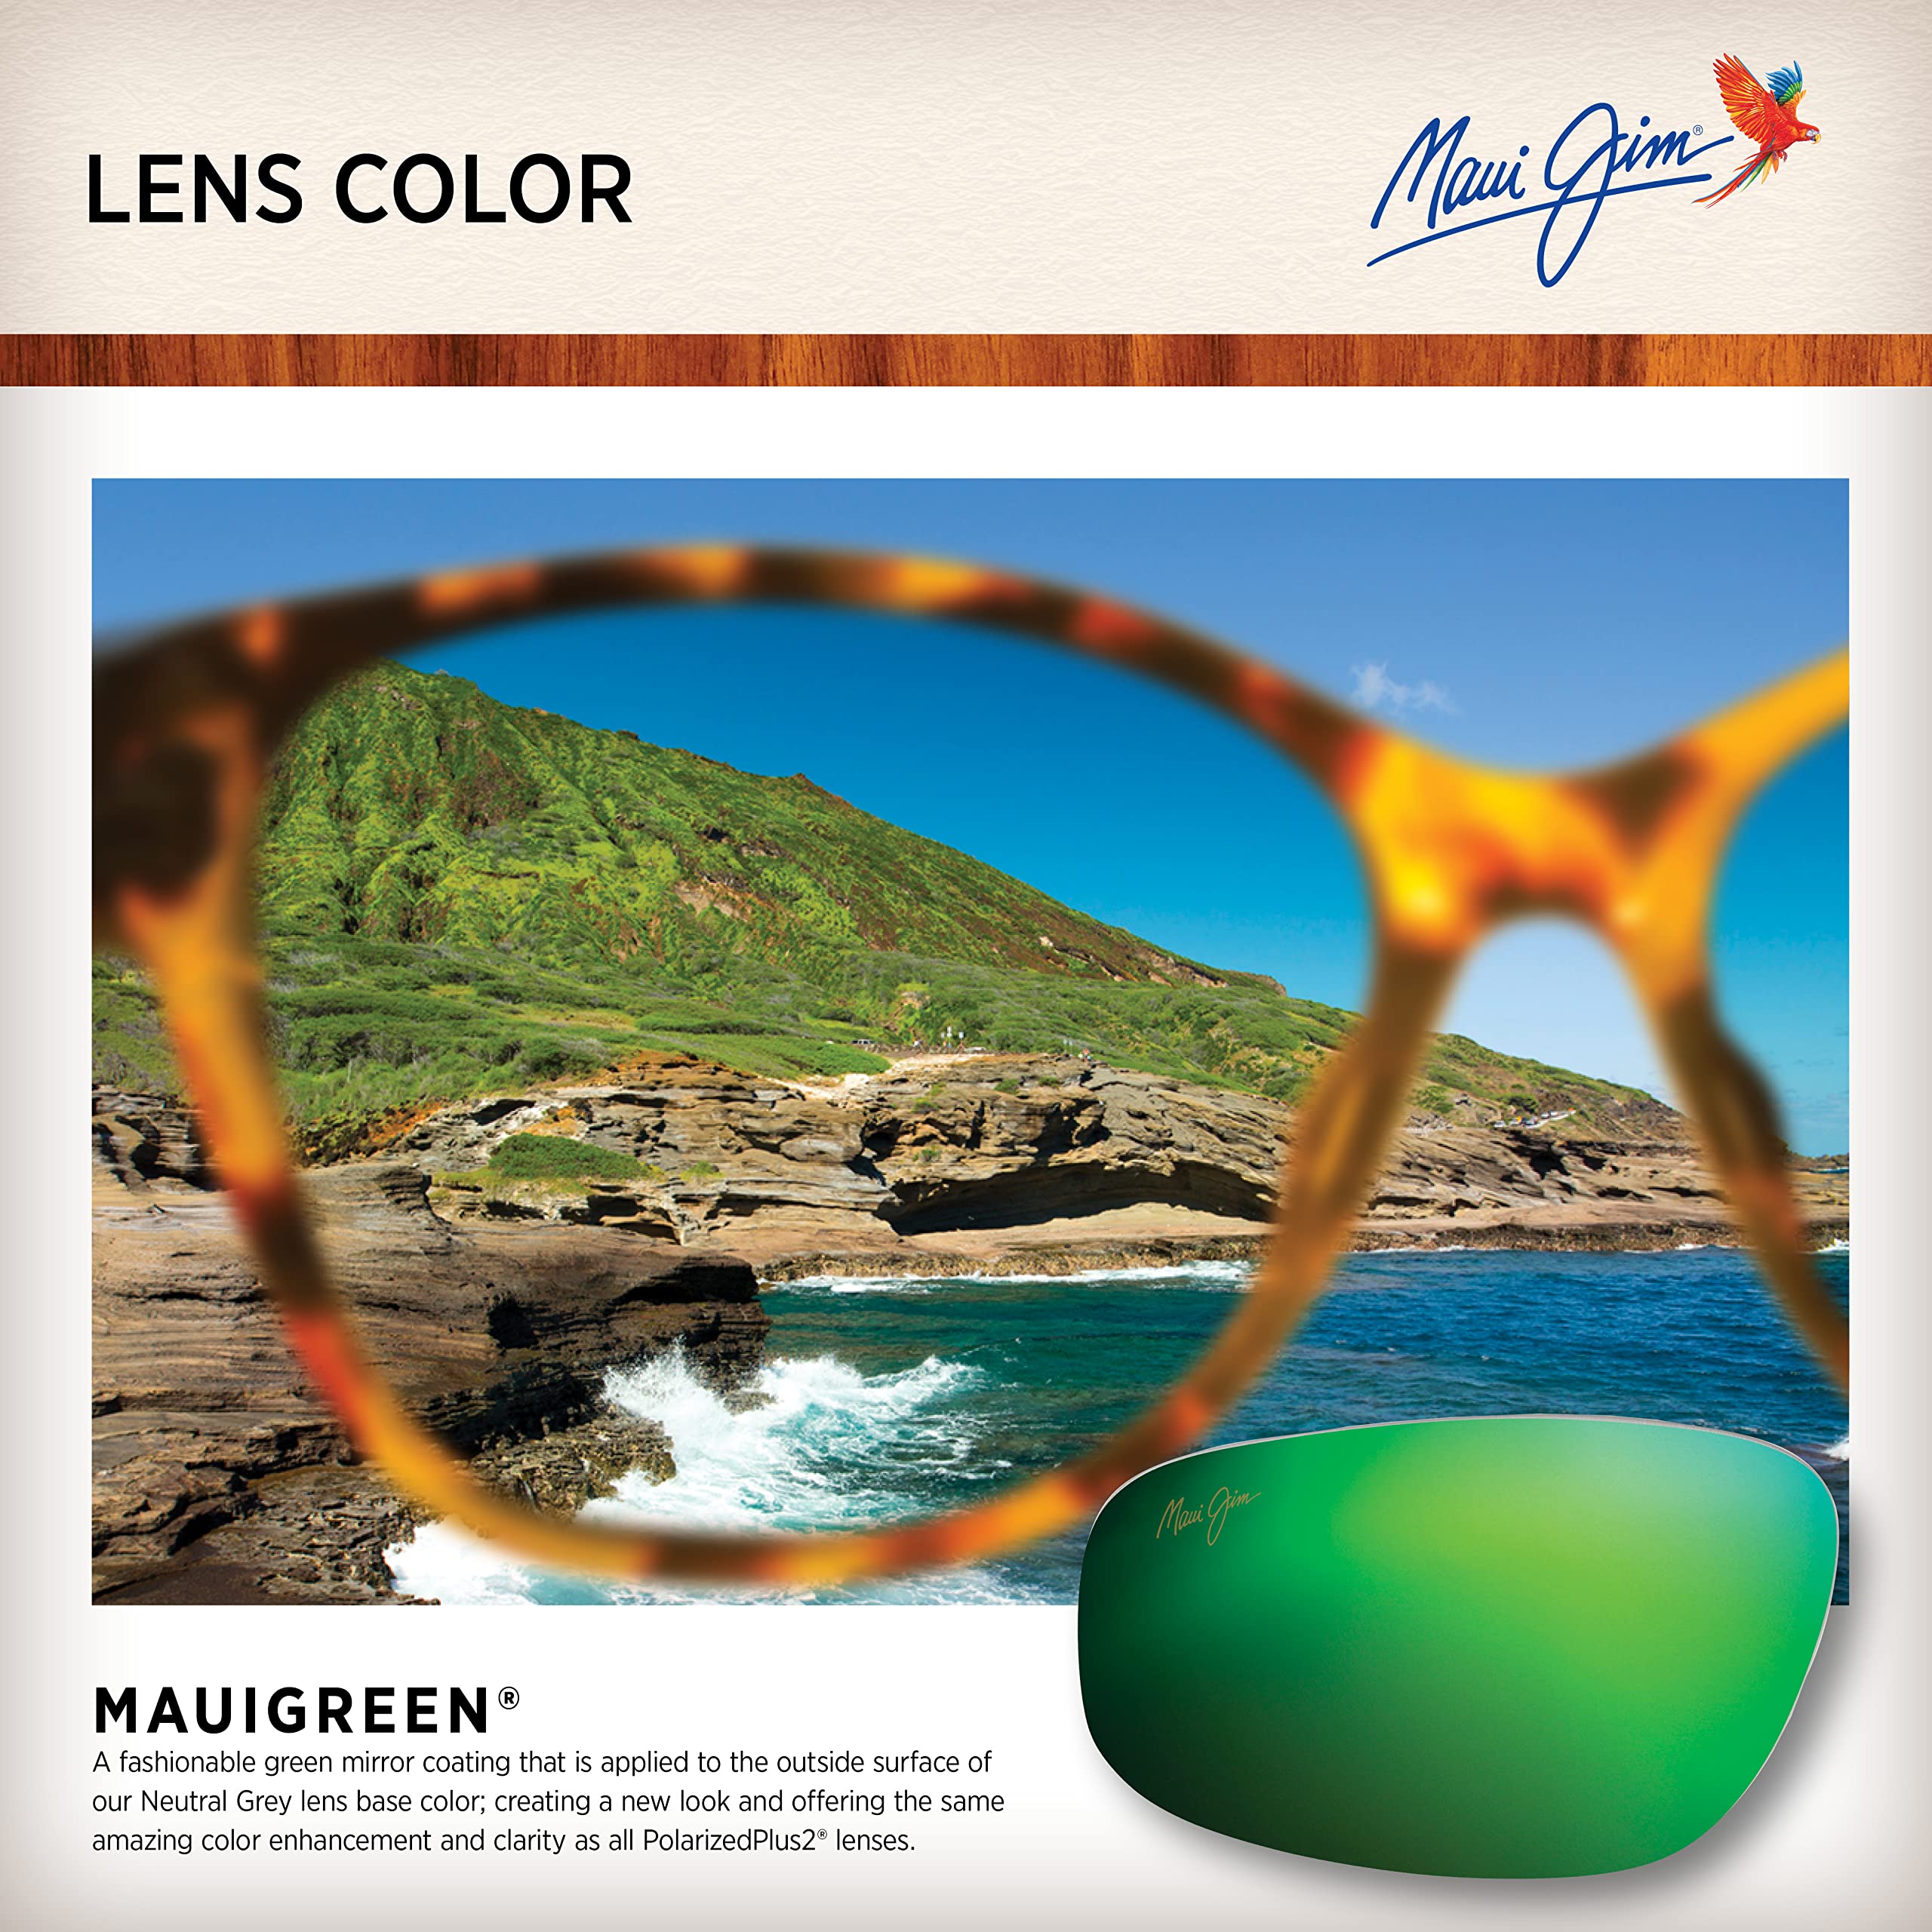 Maui Jim Men's Southern Cross Polarized Wrap Sunglasses